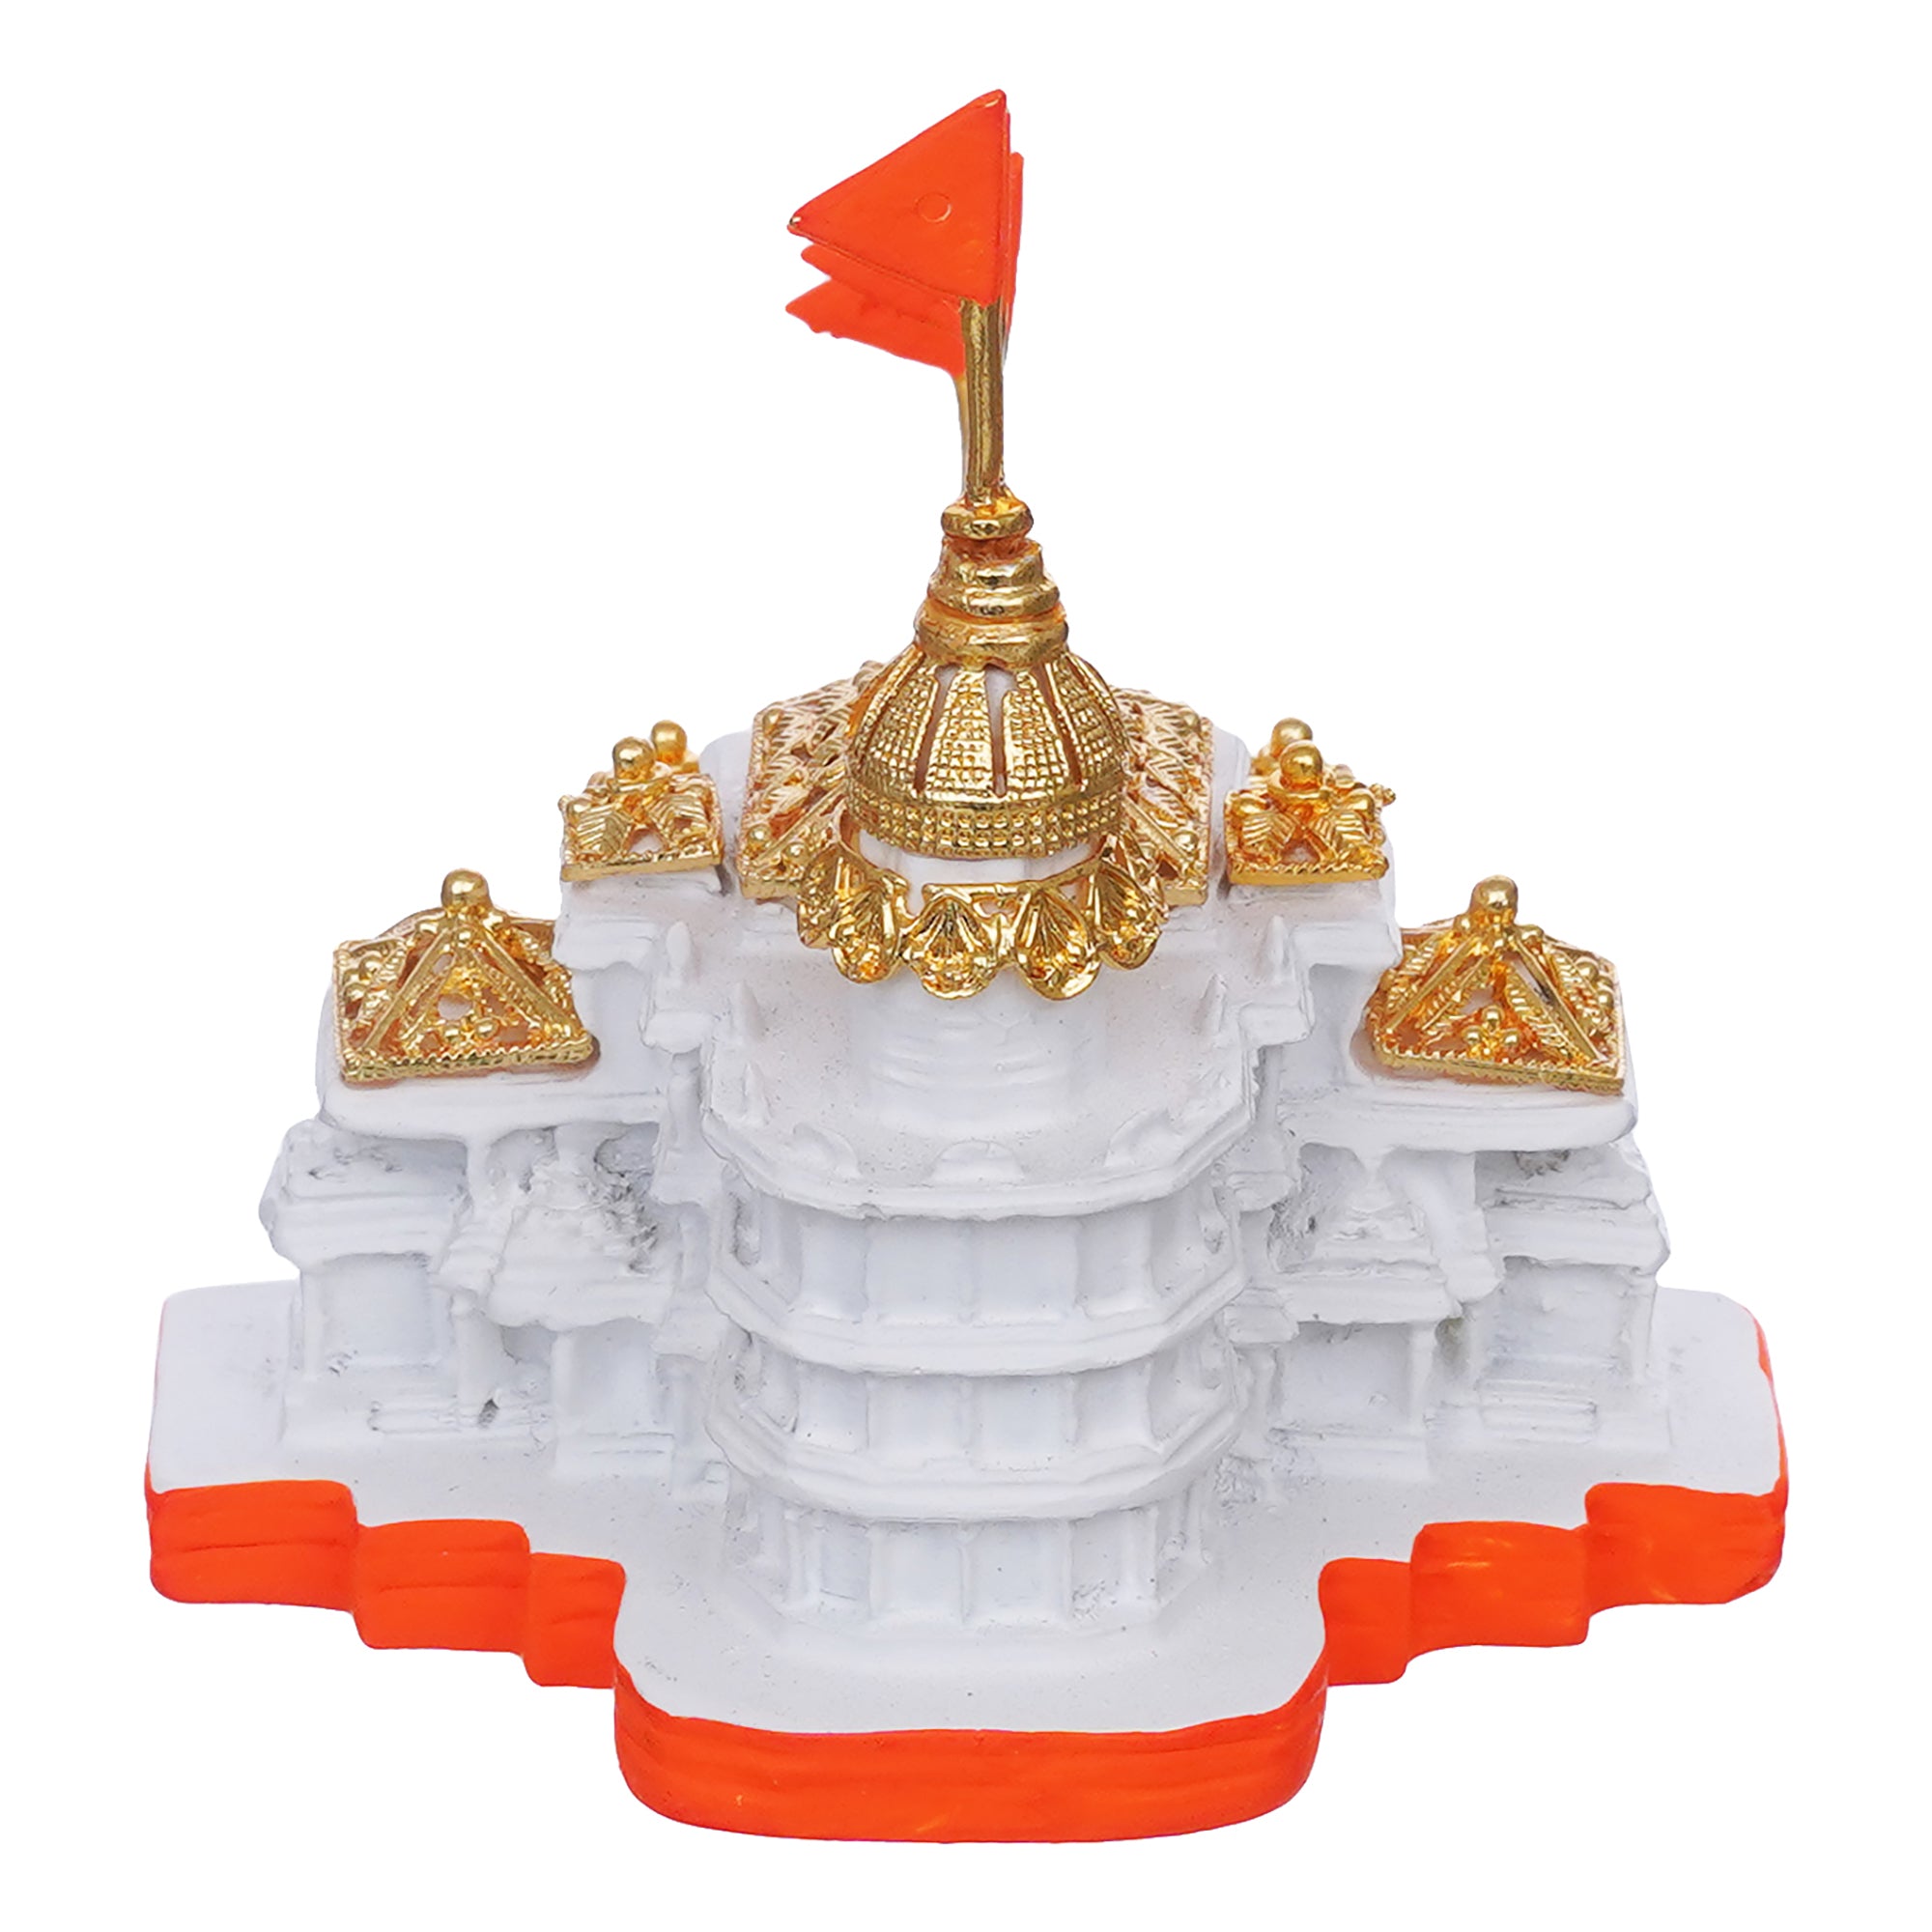 eCraftIndia Shri Ram Mandir Ayodhya Model Authentic Design - Perfect for Home Temple, Decor, and Spiritual Gifting (White, Gold, Orange) 8